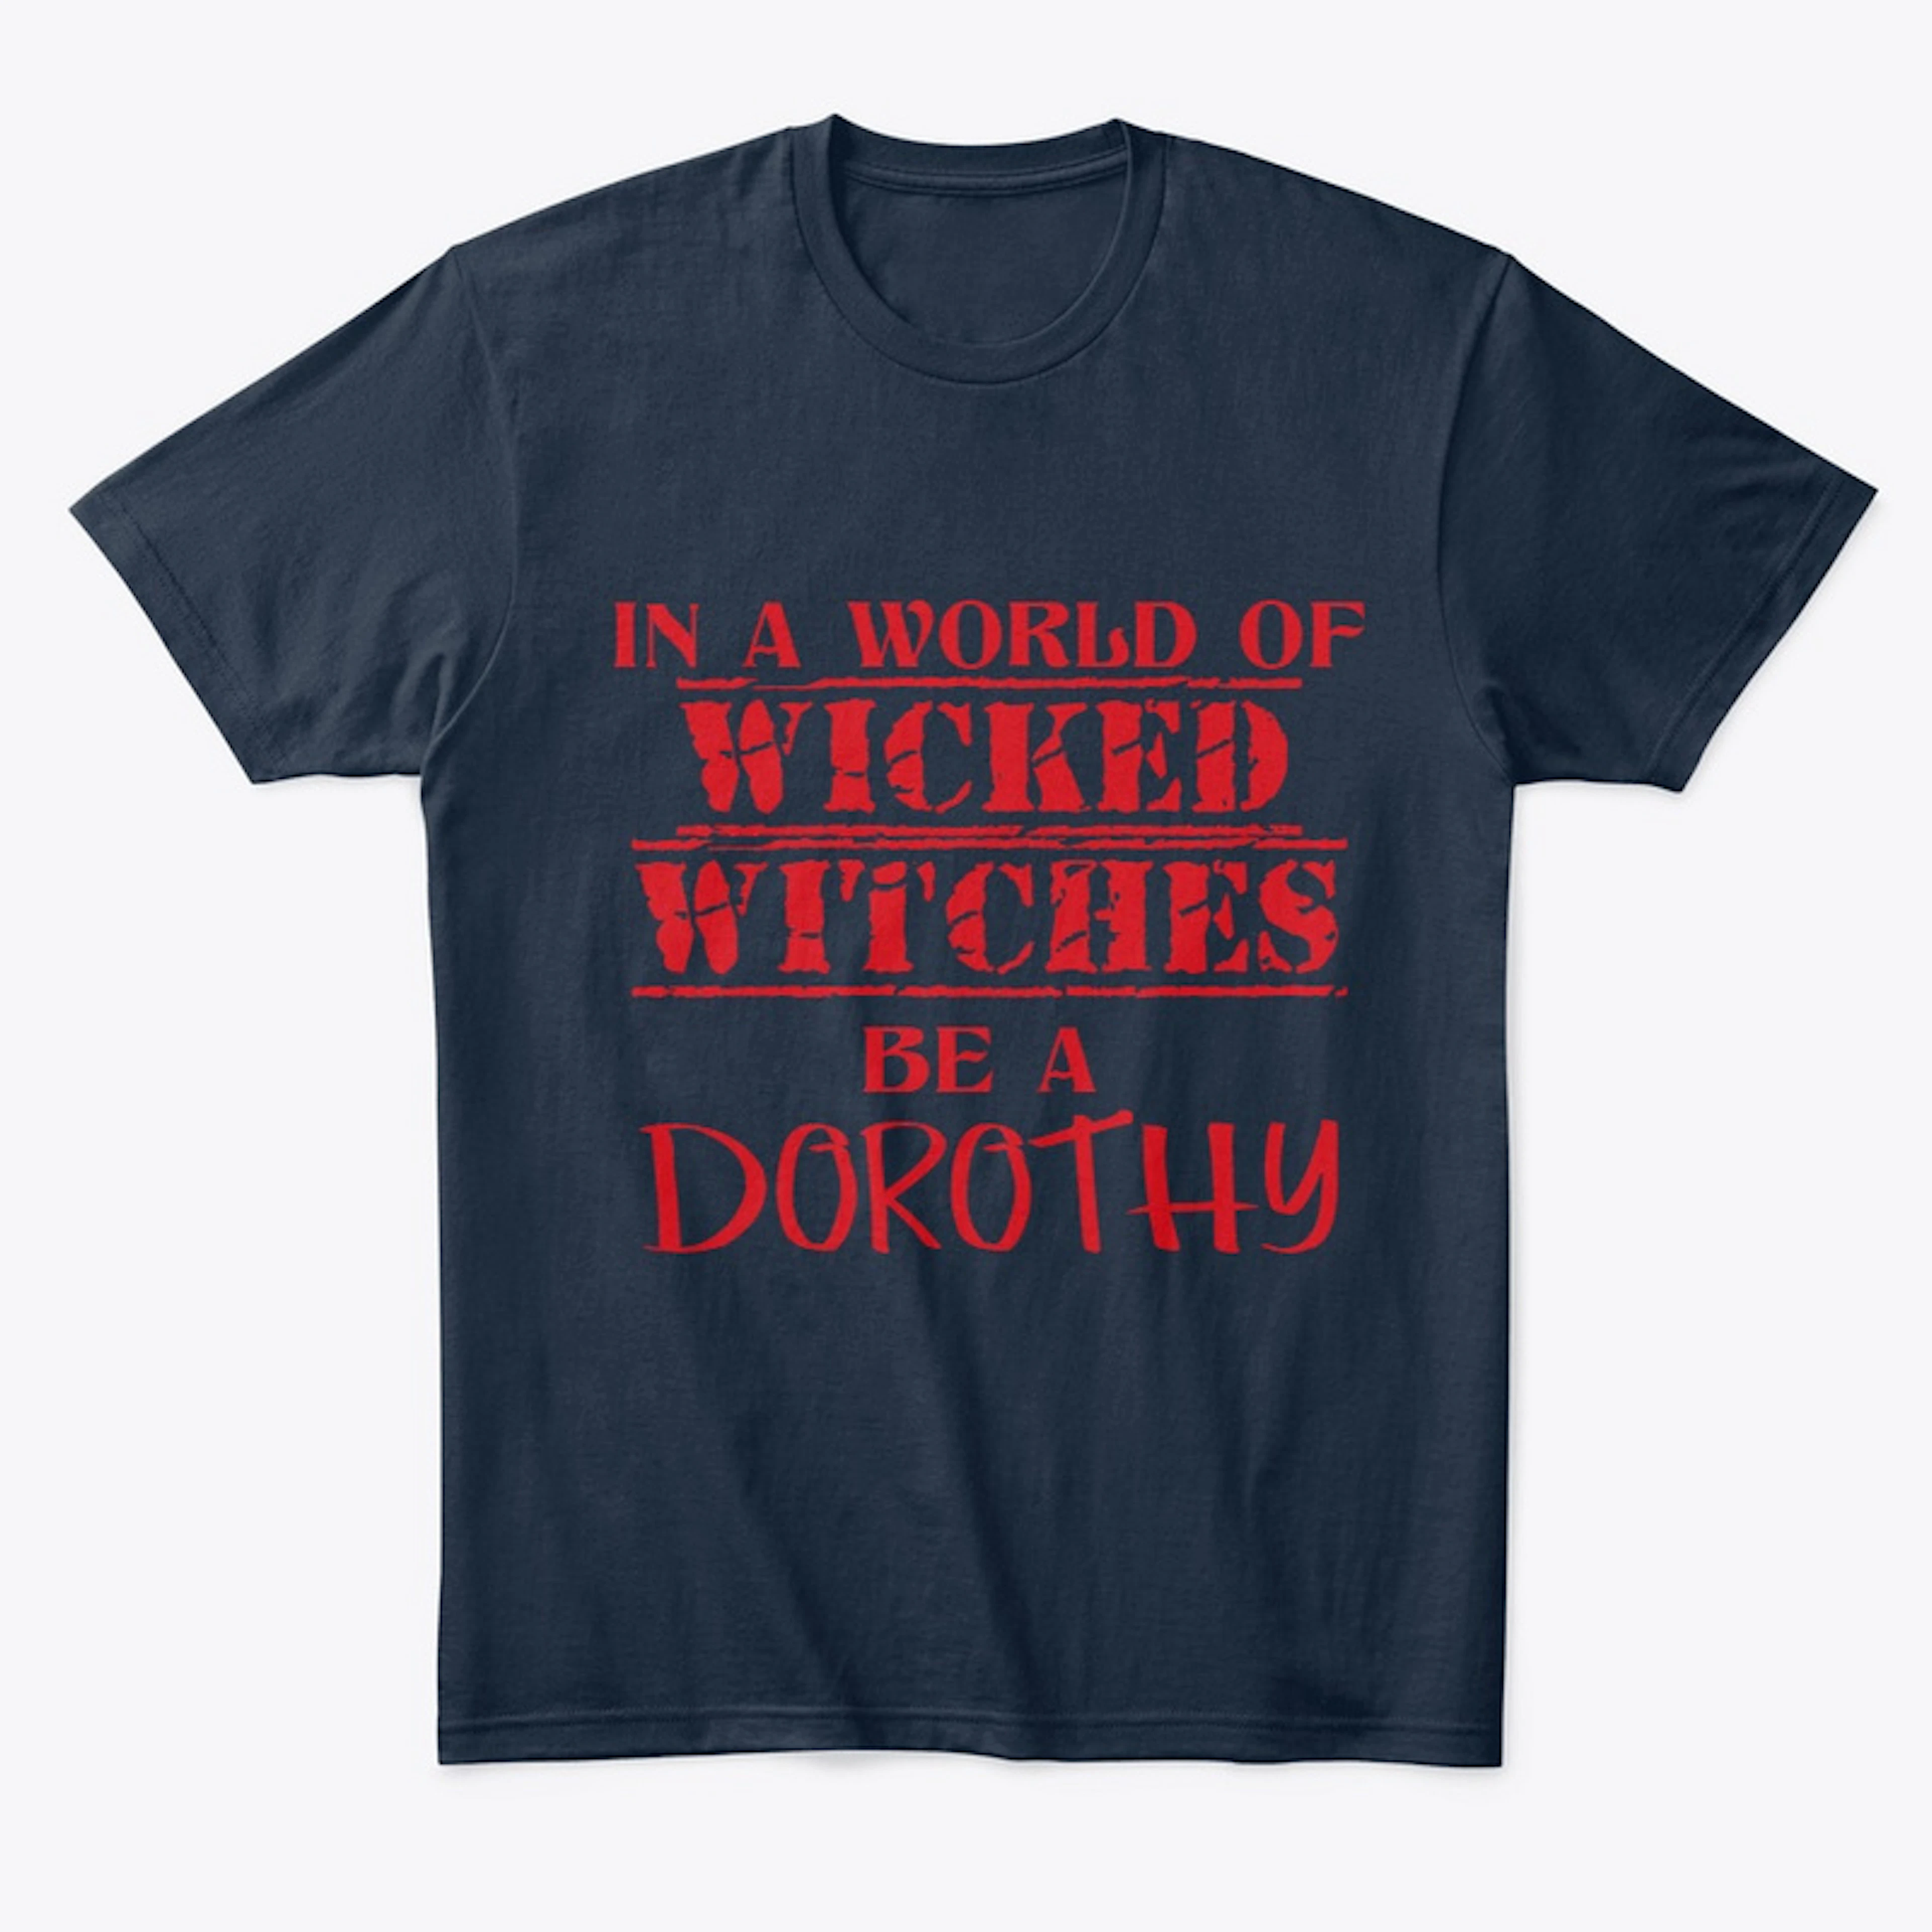 "Be A Dorothy" Tees